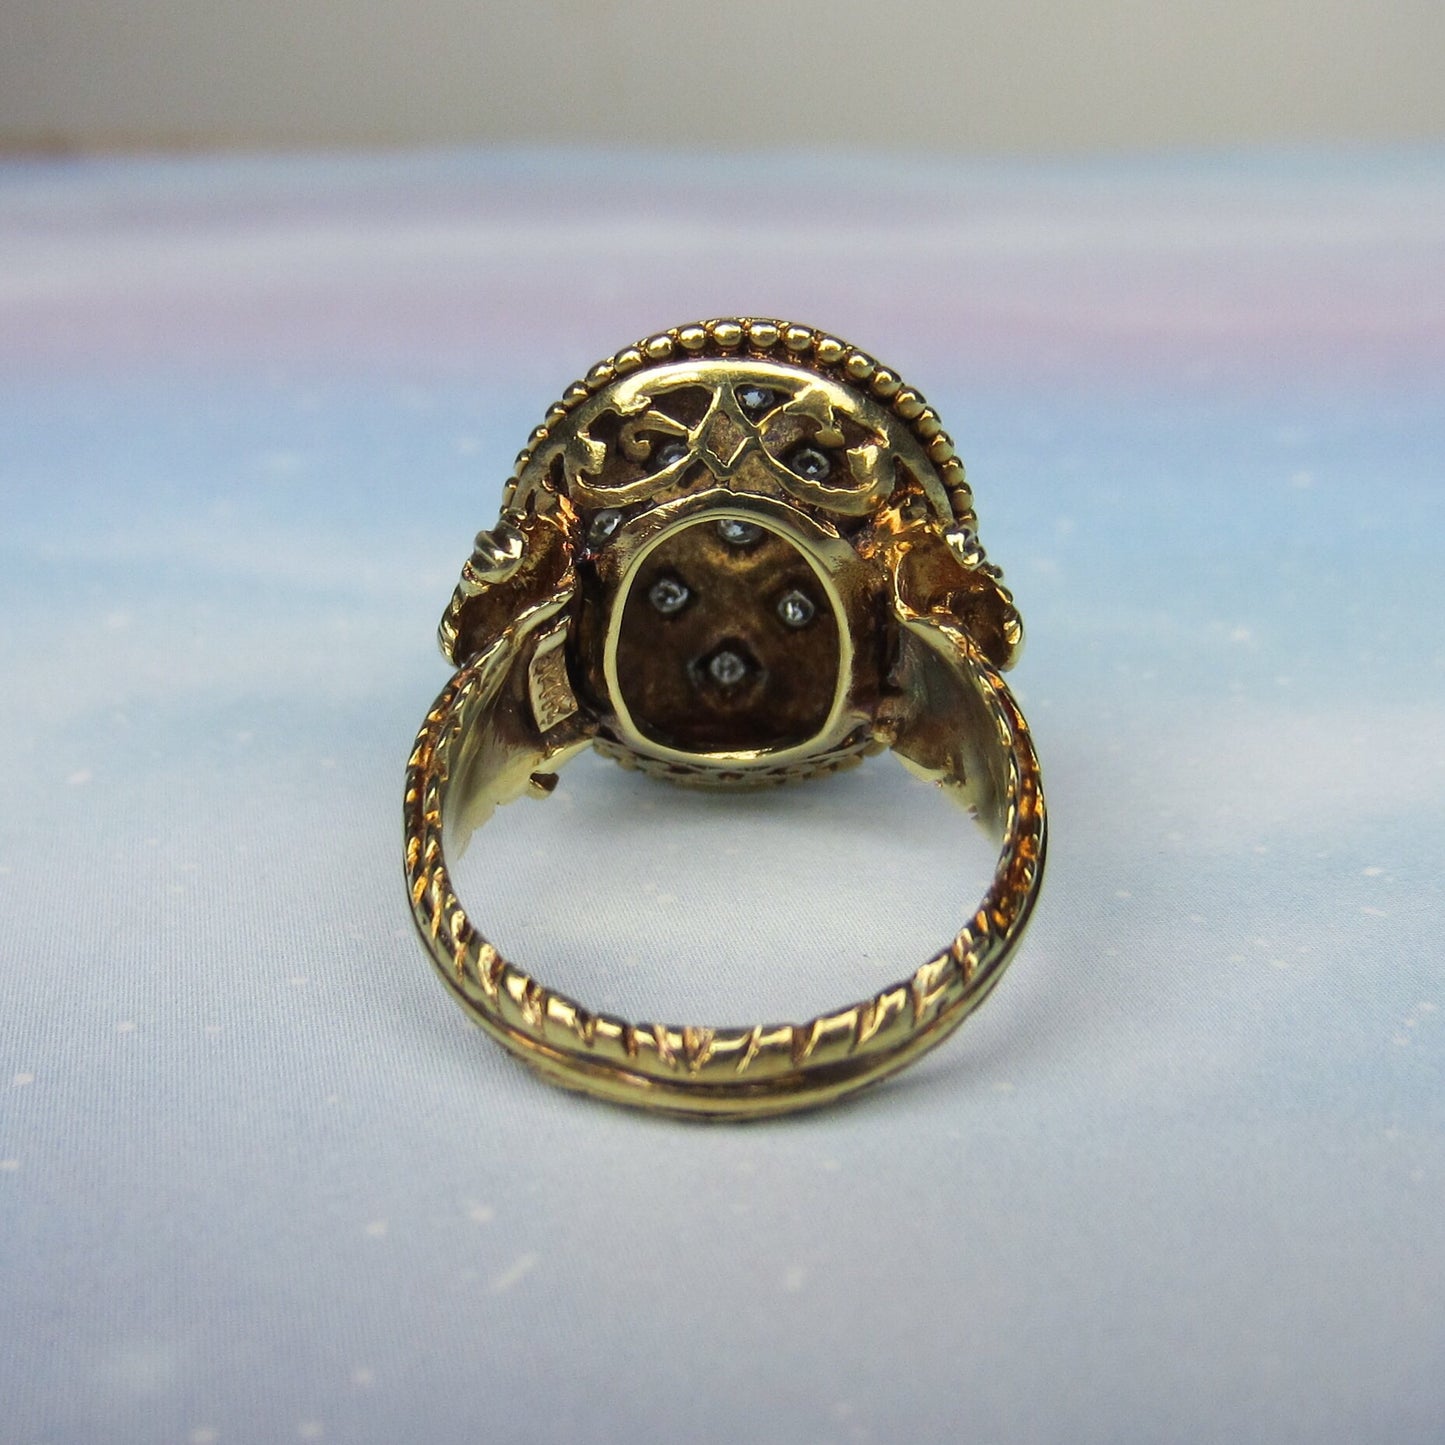 SOLD--Fantastic 1940's Victorian Revival Diamond Enamel Ring 14k